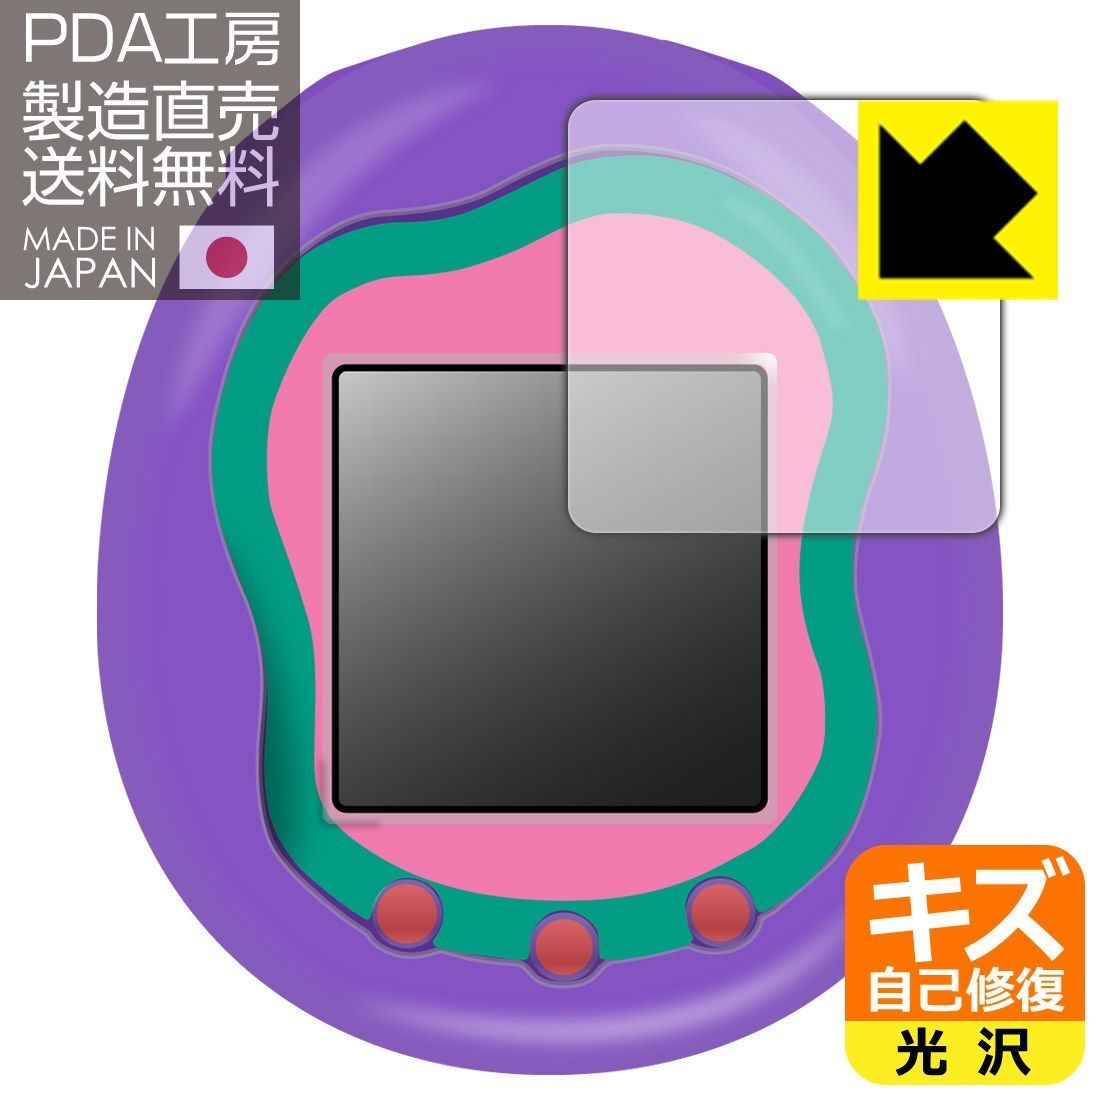 PDA工房 Tamagotchi Uni(たまごっちユニ) 対応 キズ自己修復 保護